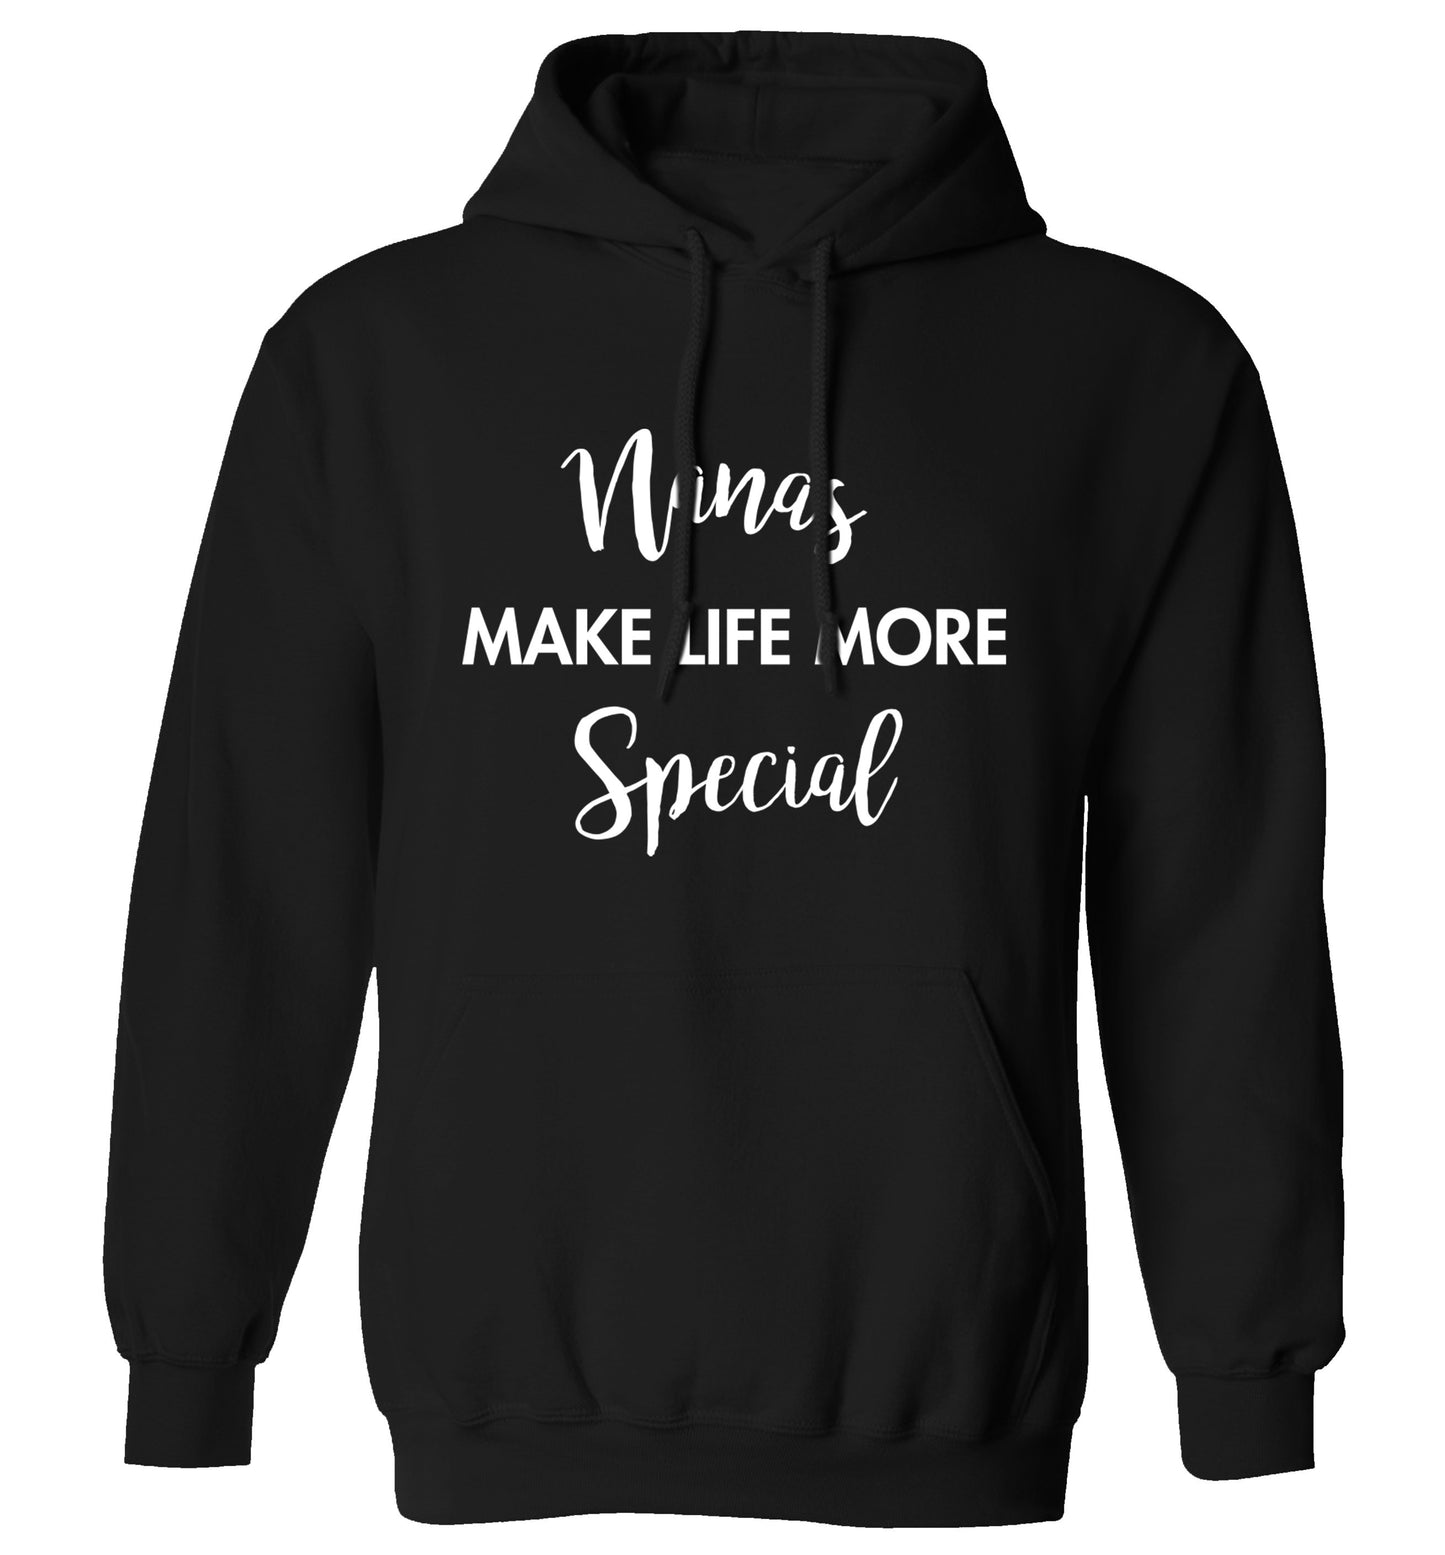 Nanas make life more special adults unisex black hoodie 2XL